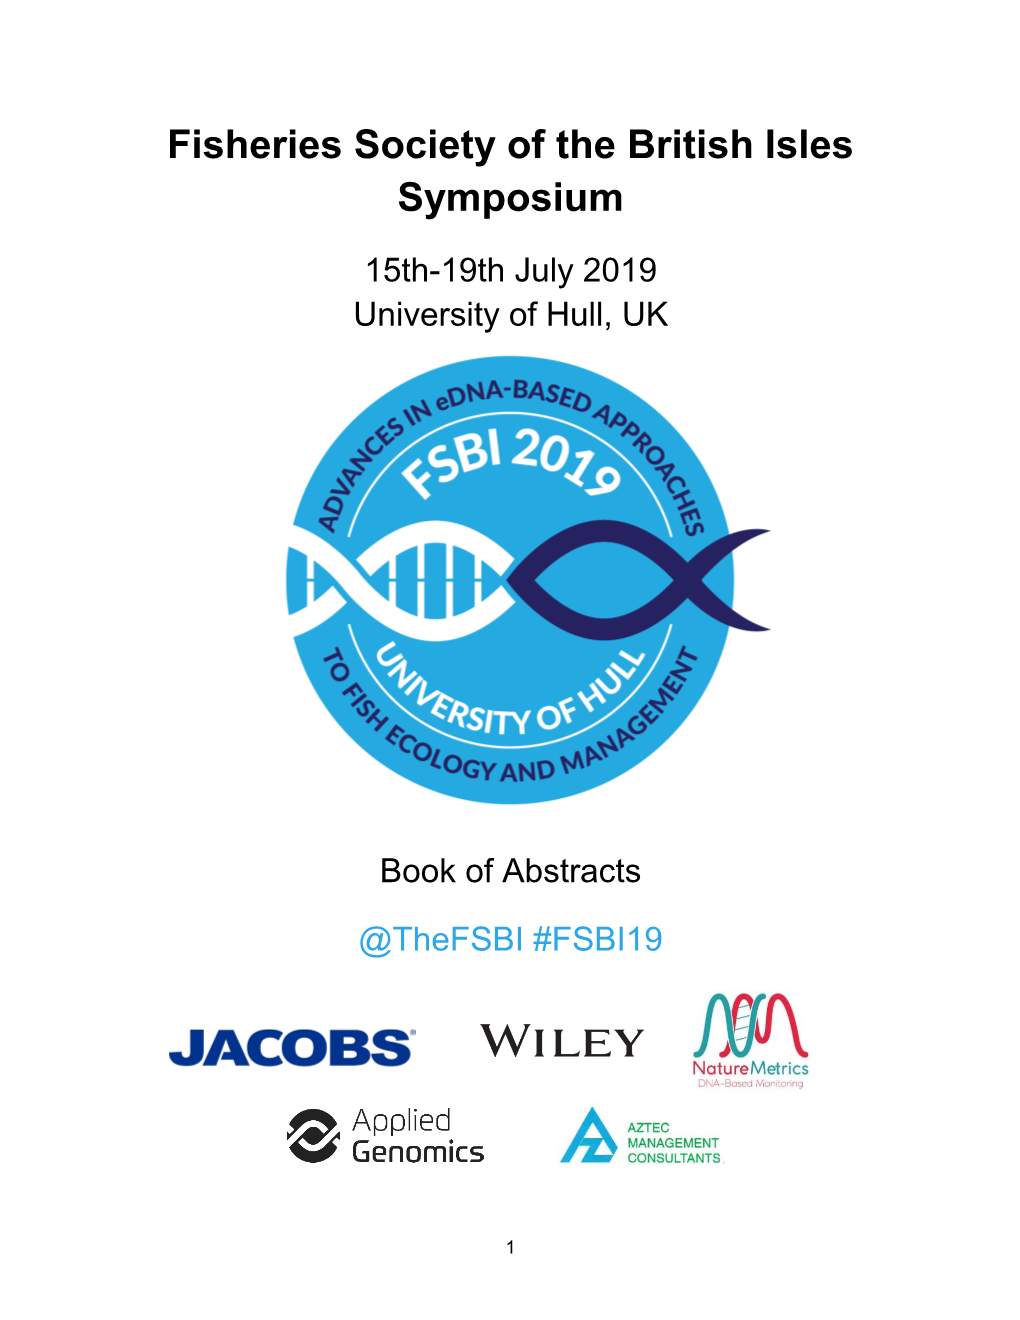 Fisheries Society of the British Isles Symposium